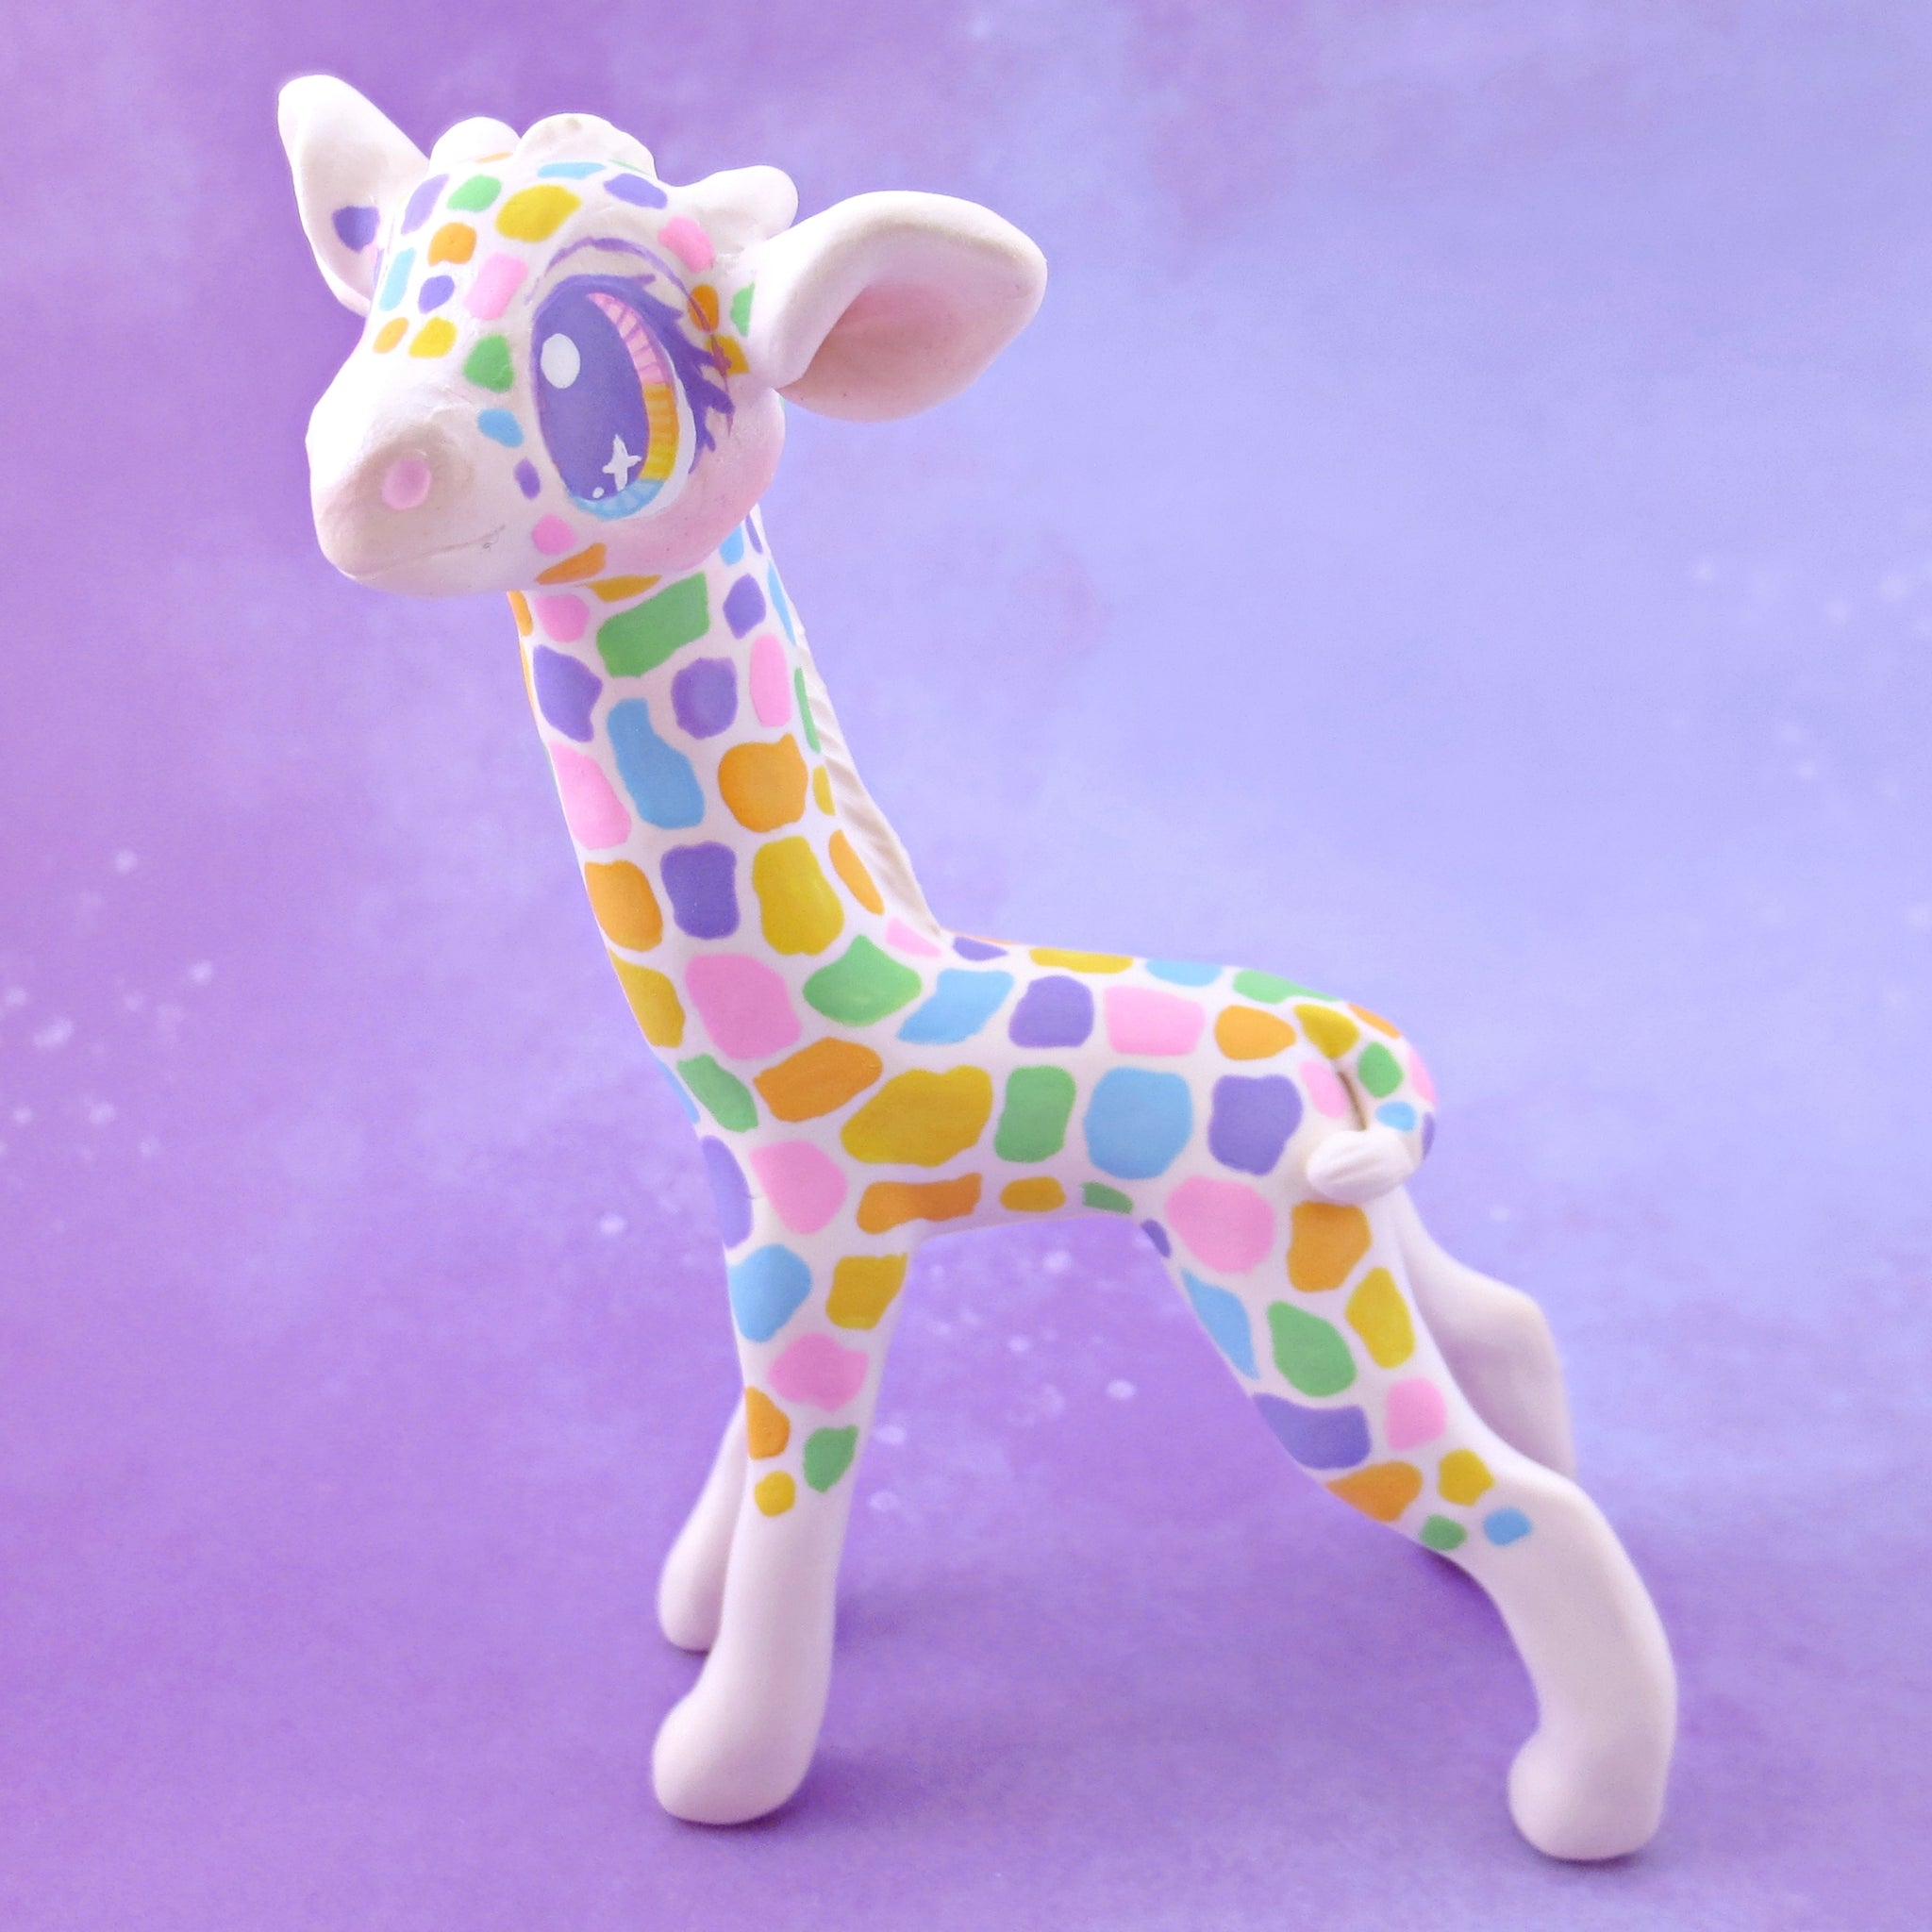 Rainbow Giraffe Figurine - Polymer Clay Rainbow Animals